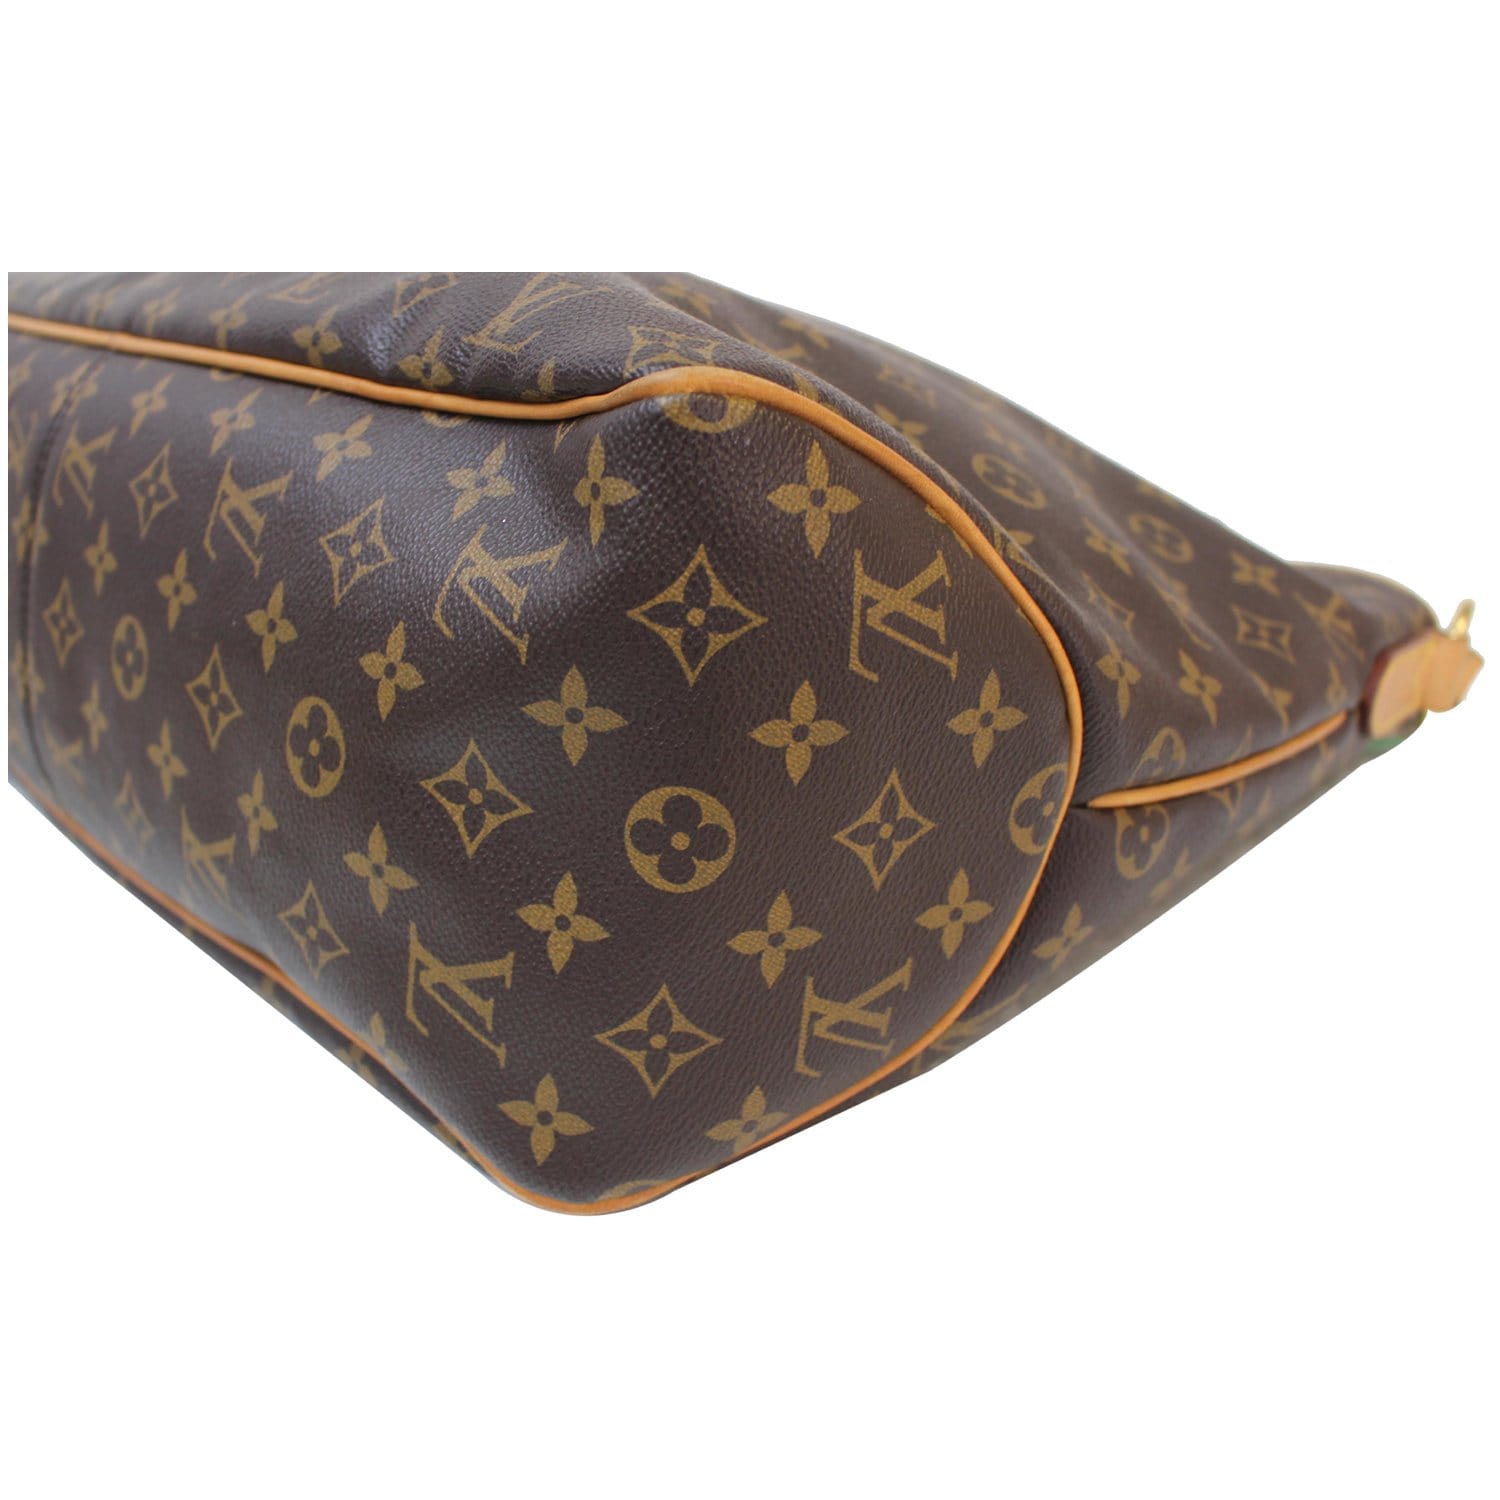 The GM Or MM: Louis Vuitton Delightful Handbag